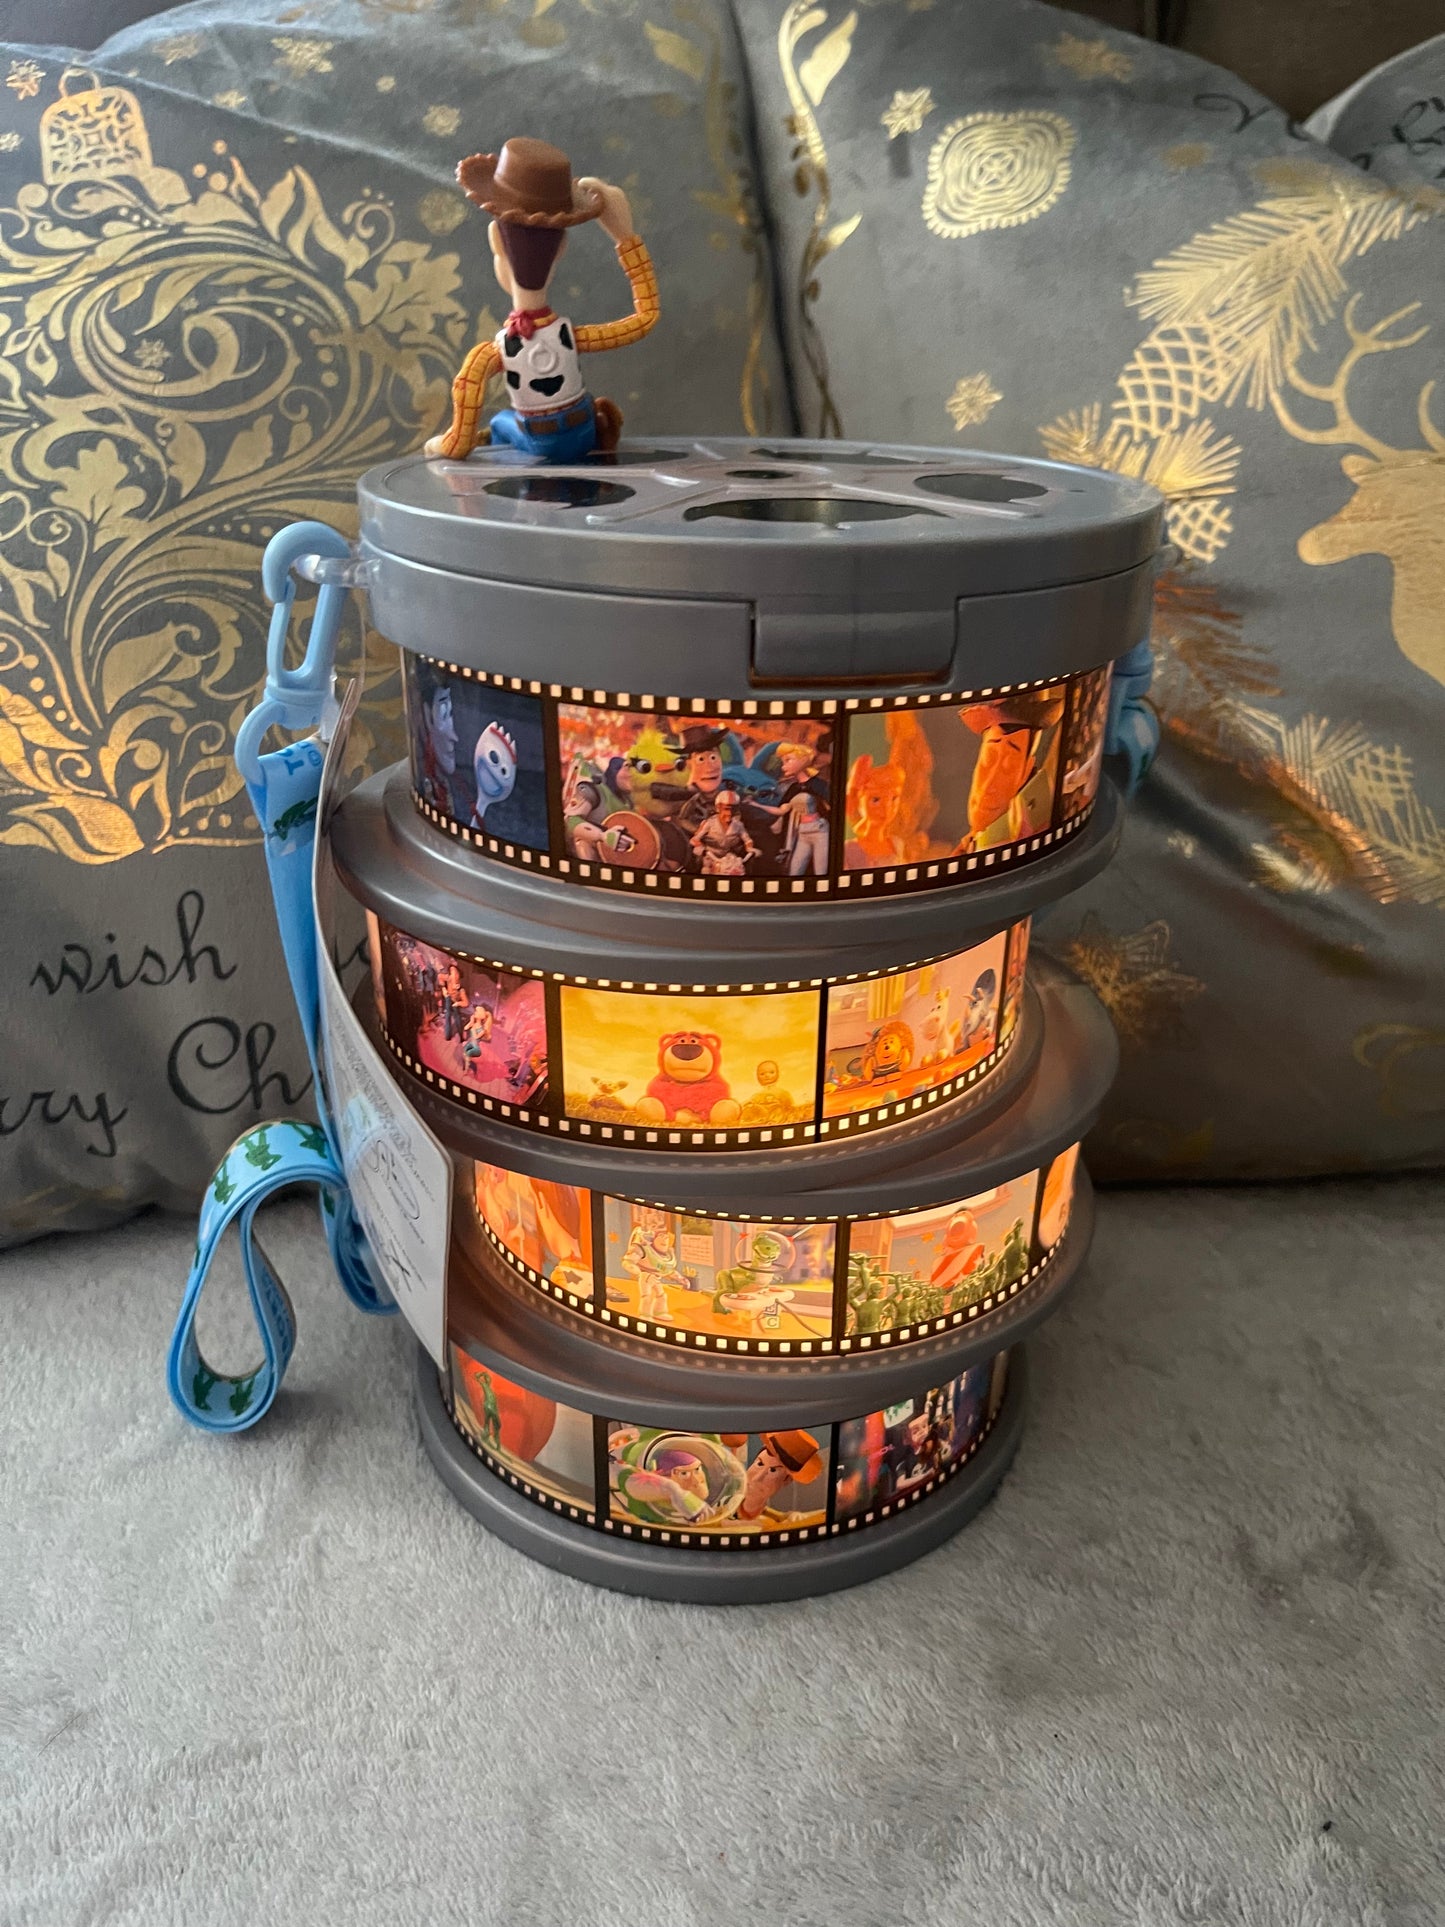 Tokyo Disney toy story woody light up popcorn bucket